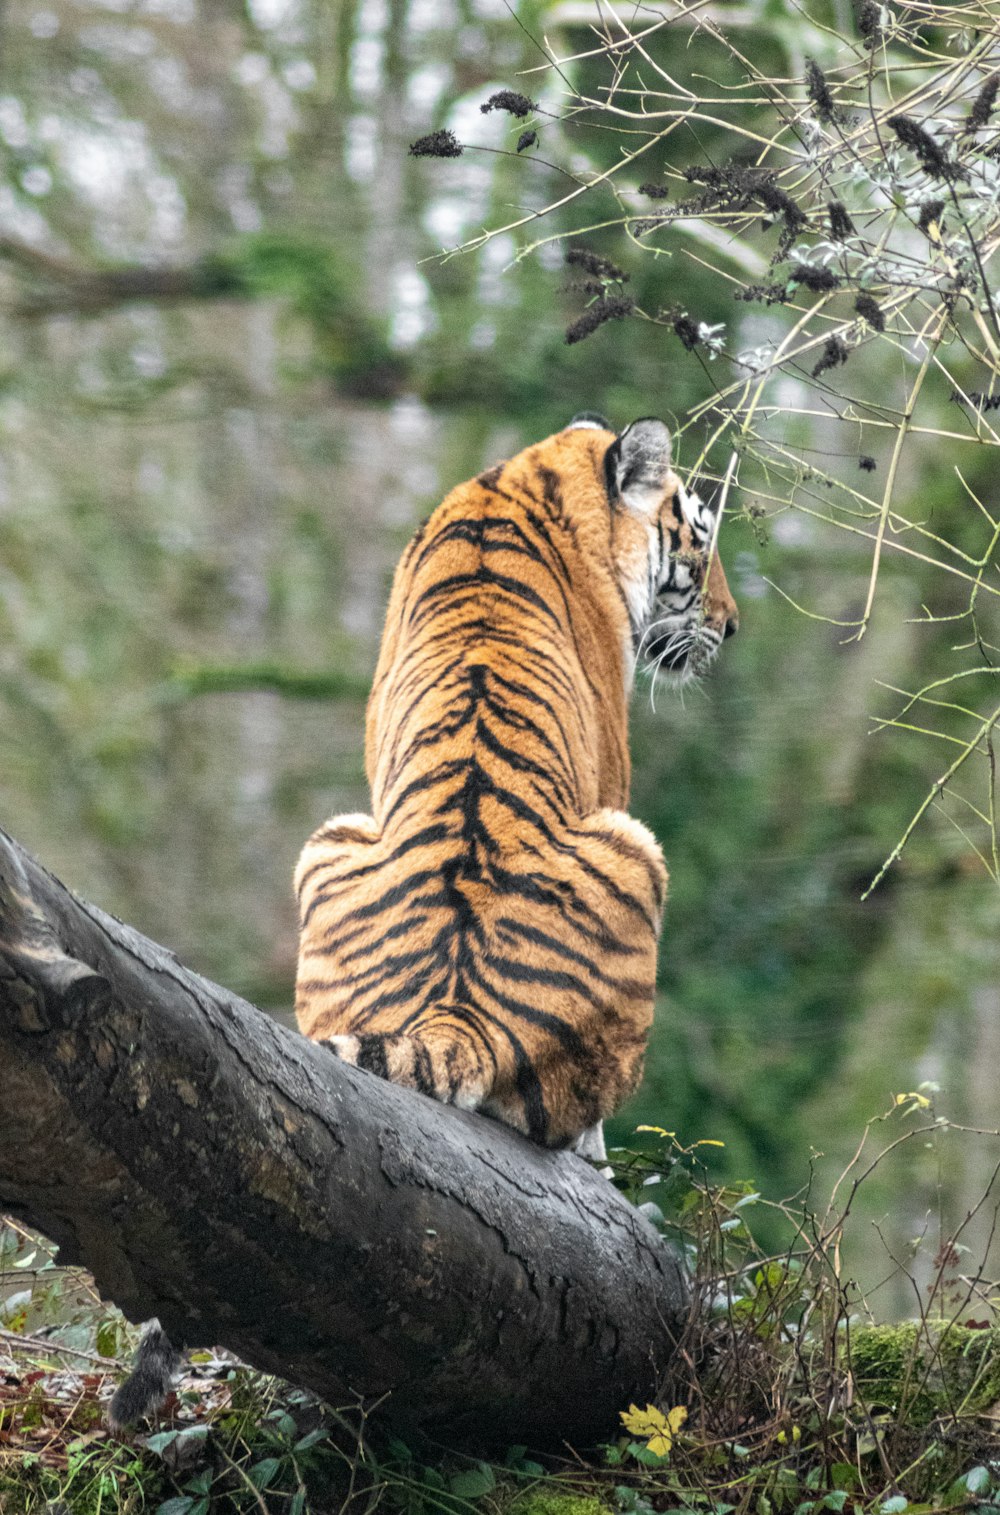 tiger lying on tree branch during daytime